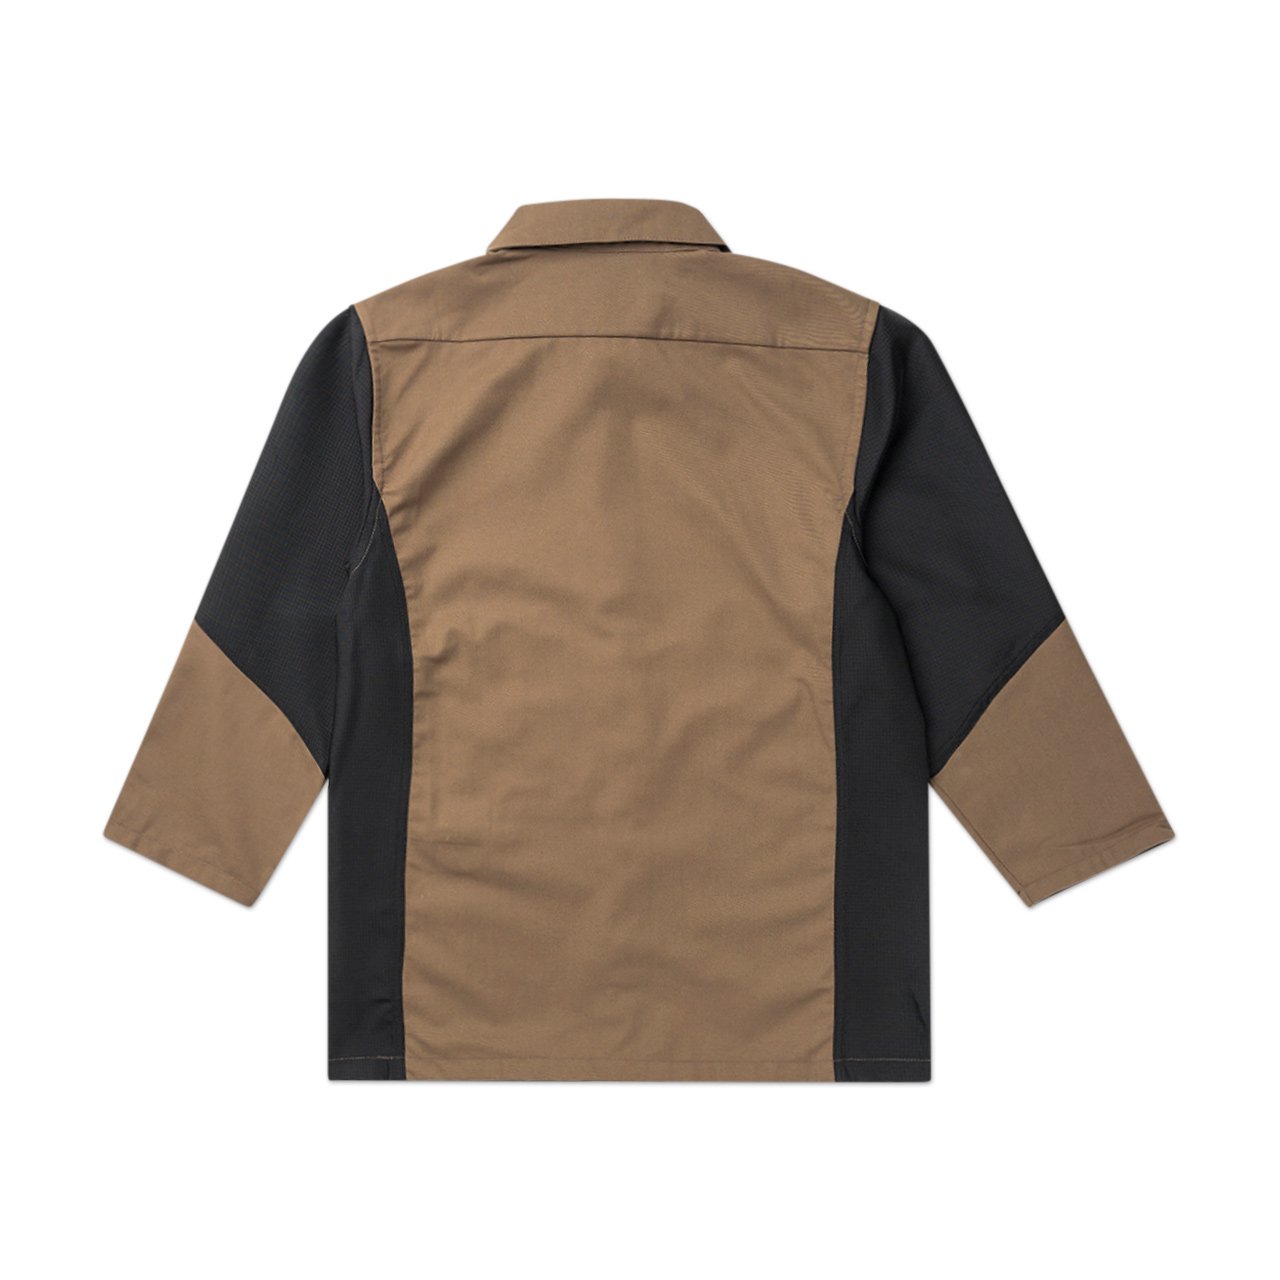 affix duo-tone work shirt (tan / black) - aw20t03 - a.plus - Image - 2